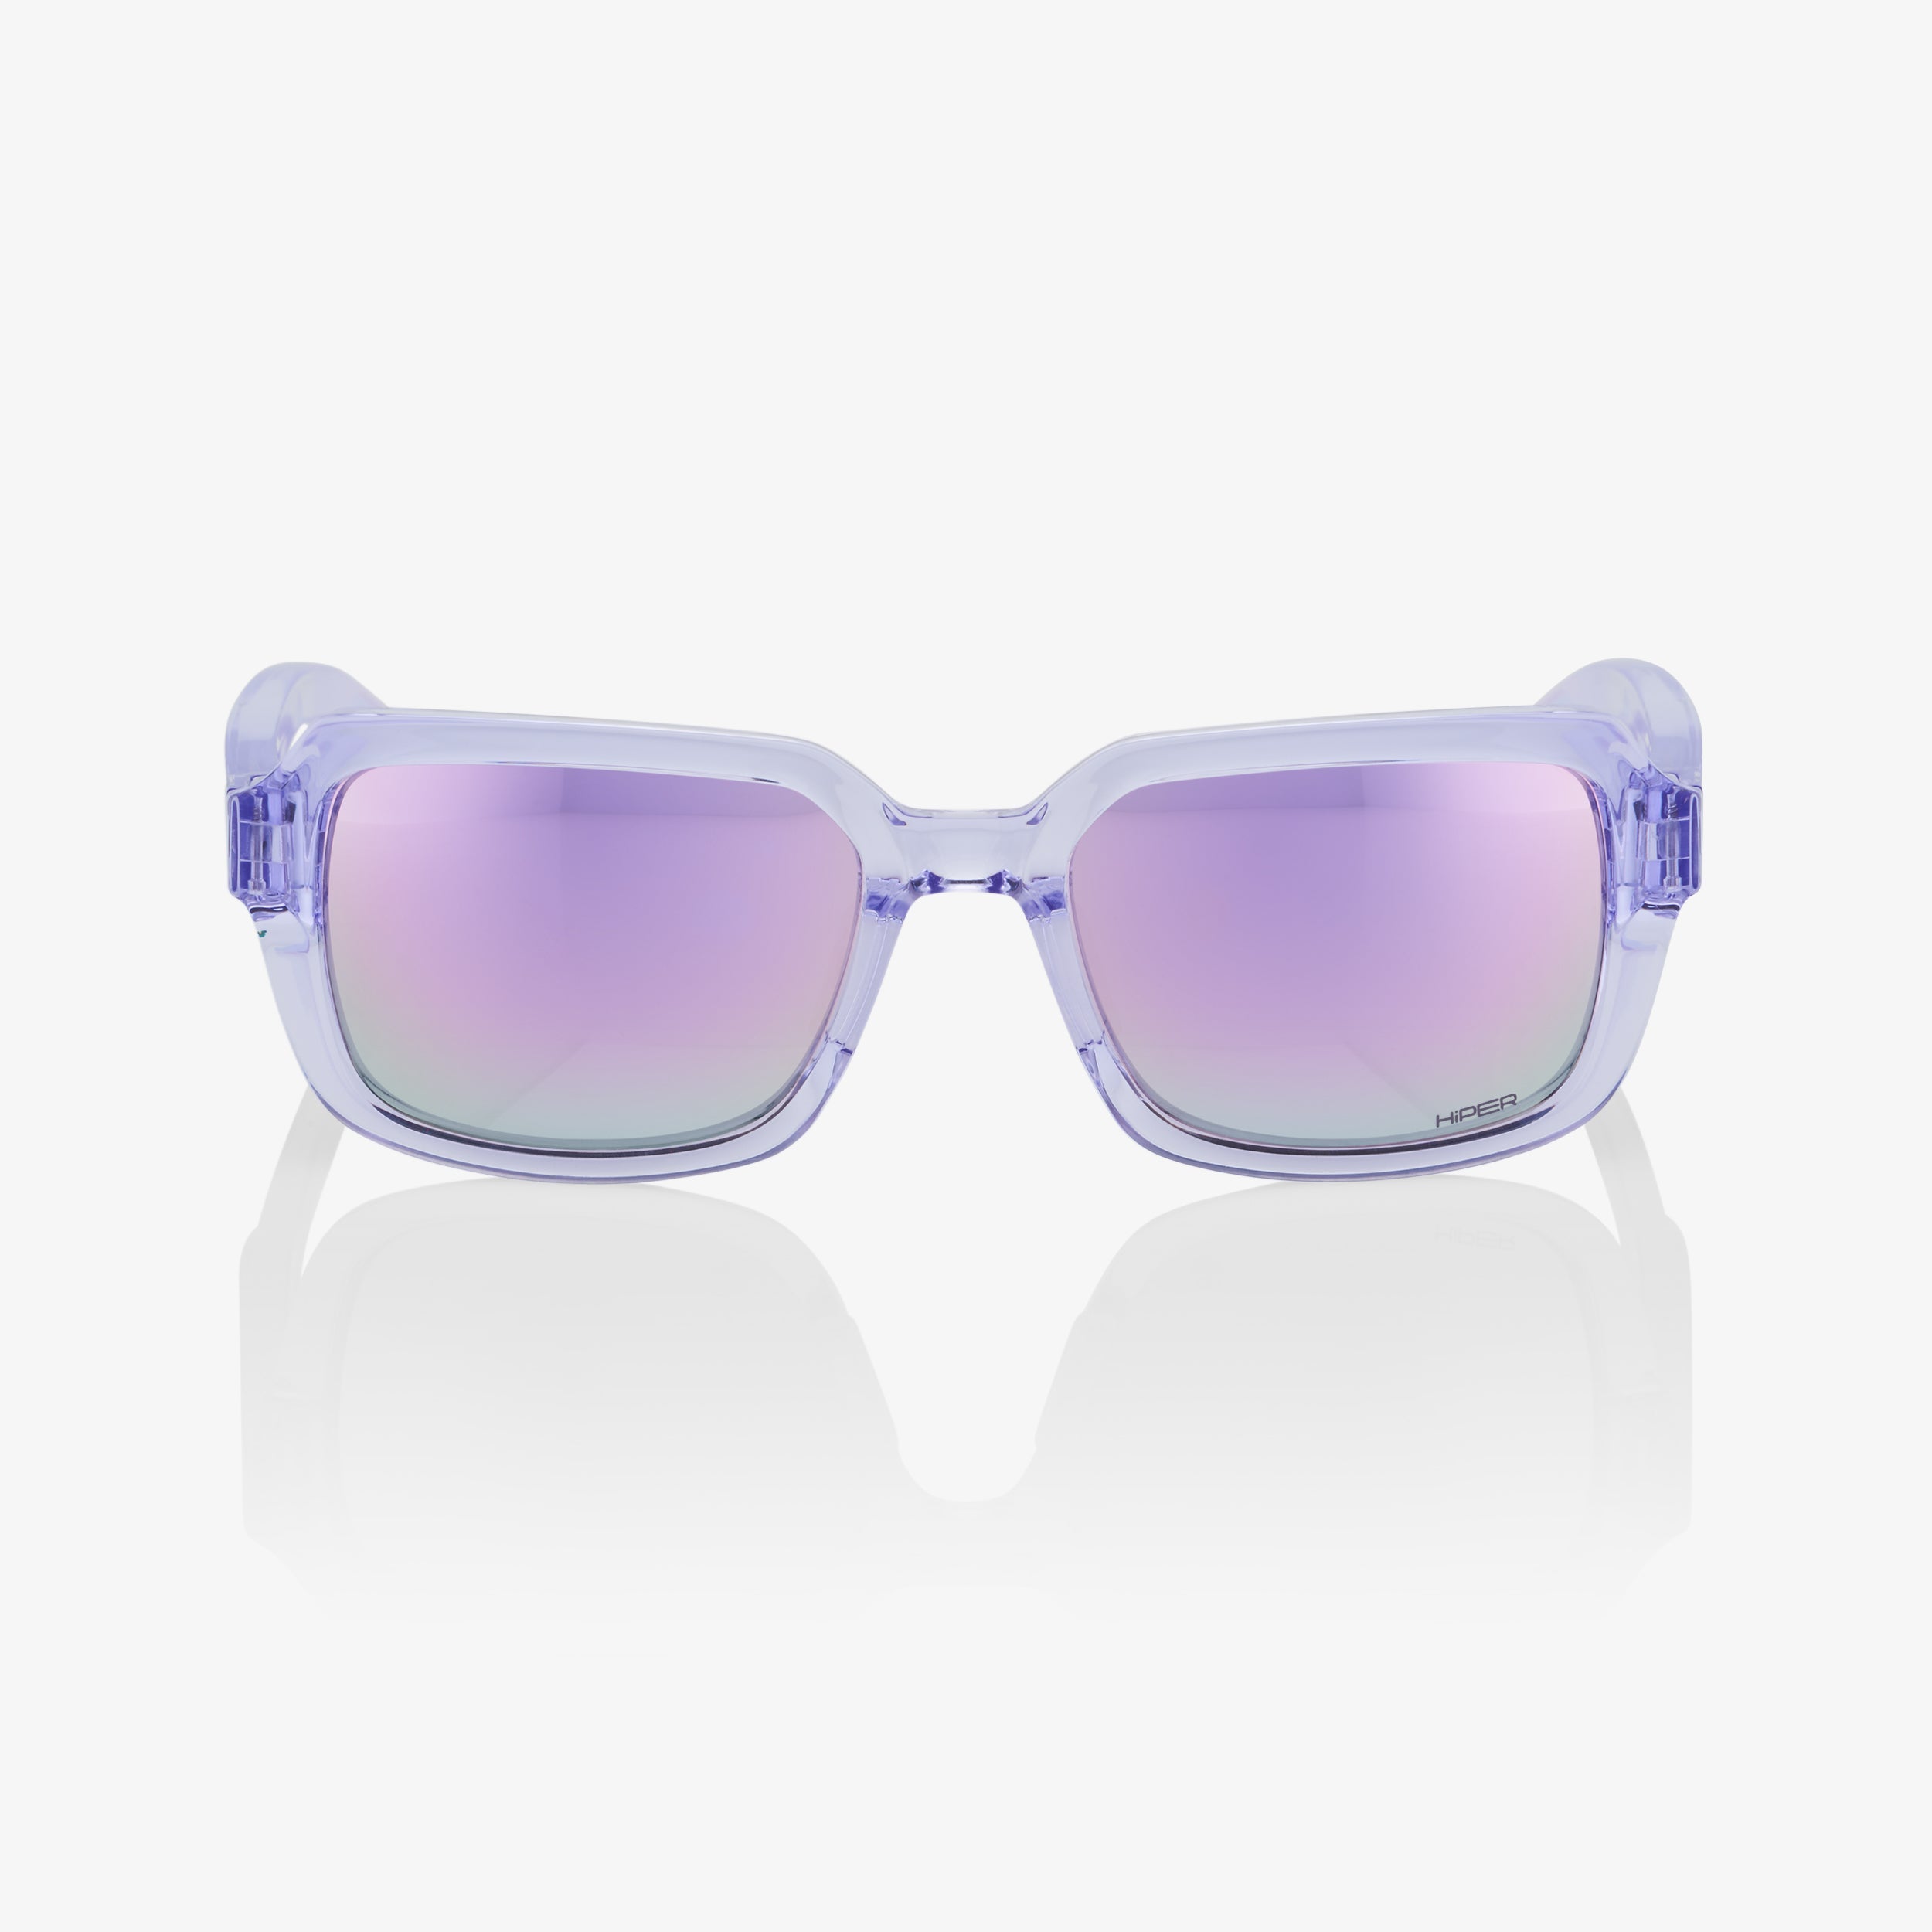 RIDELEY - Polished Translucent Lavender - HiPER Lavender Mirror Lens - Secondary